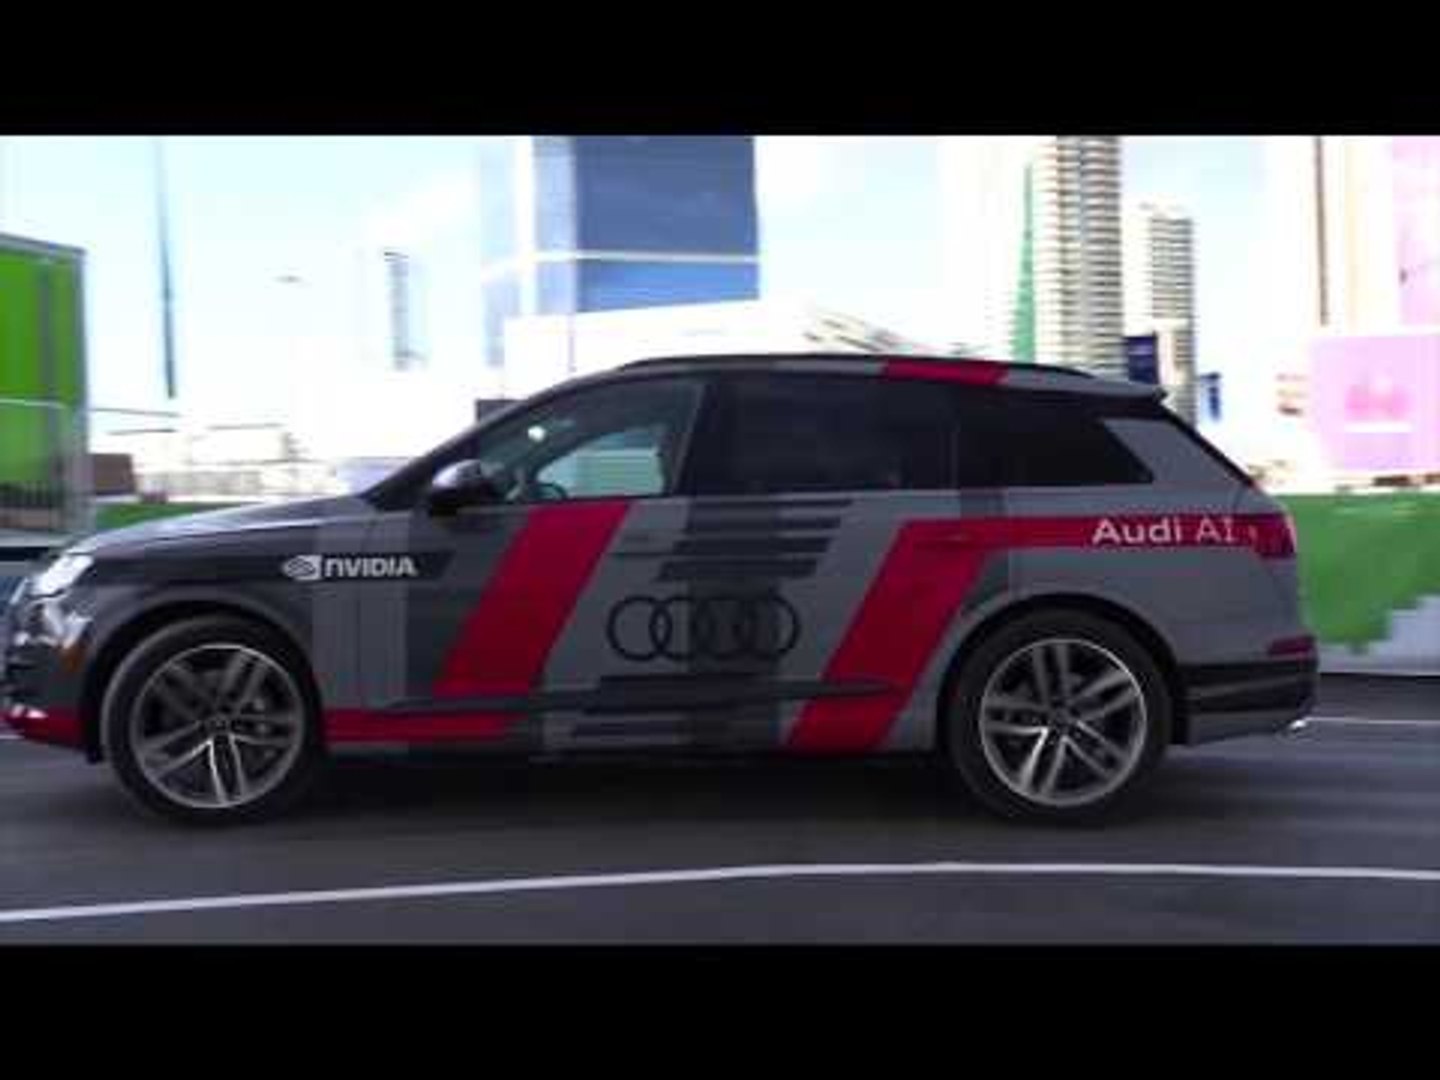 Audi Q7 Deep Learning Concept - Exterior Design | AutoMotoTV